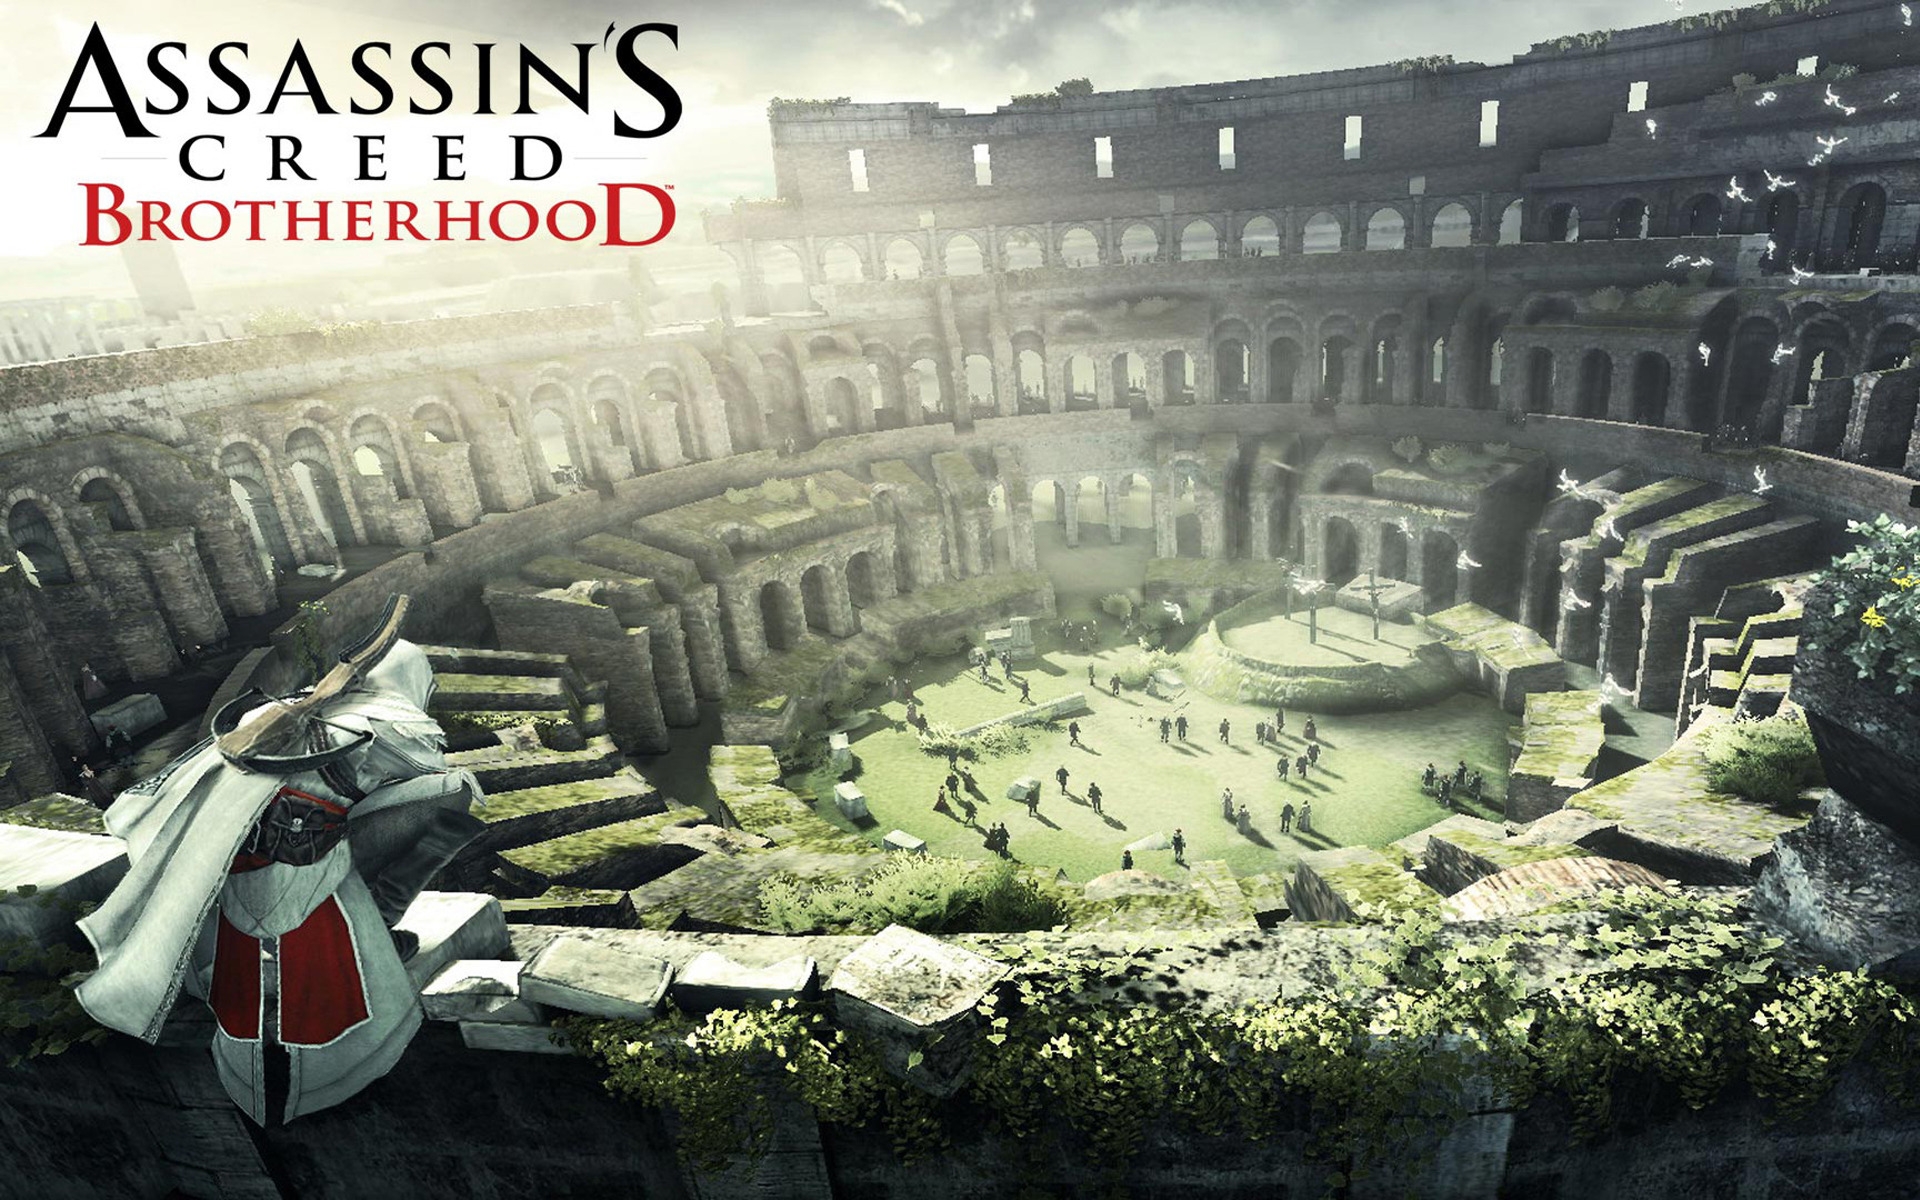 Assassins Creed Brotherhood for 1920 x 1200 widescreen resolution